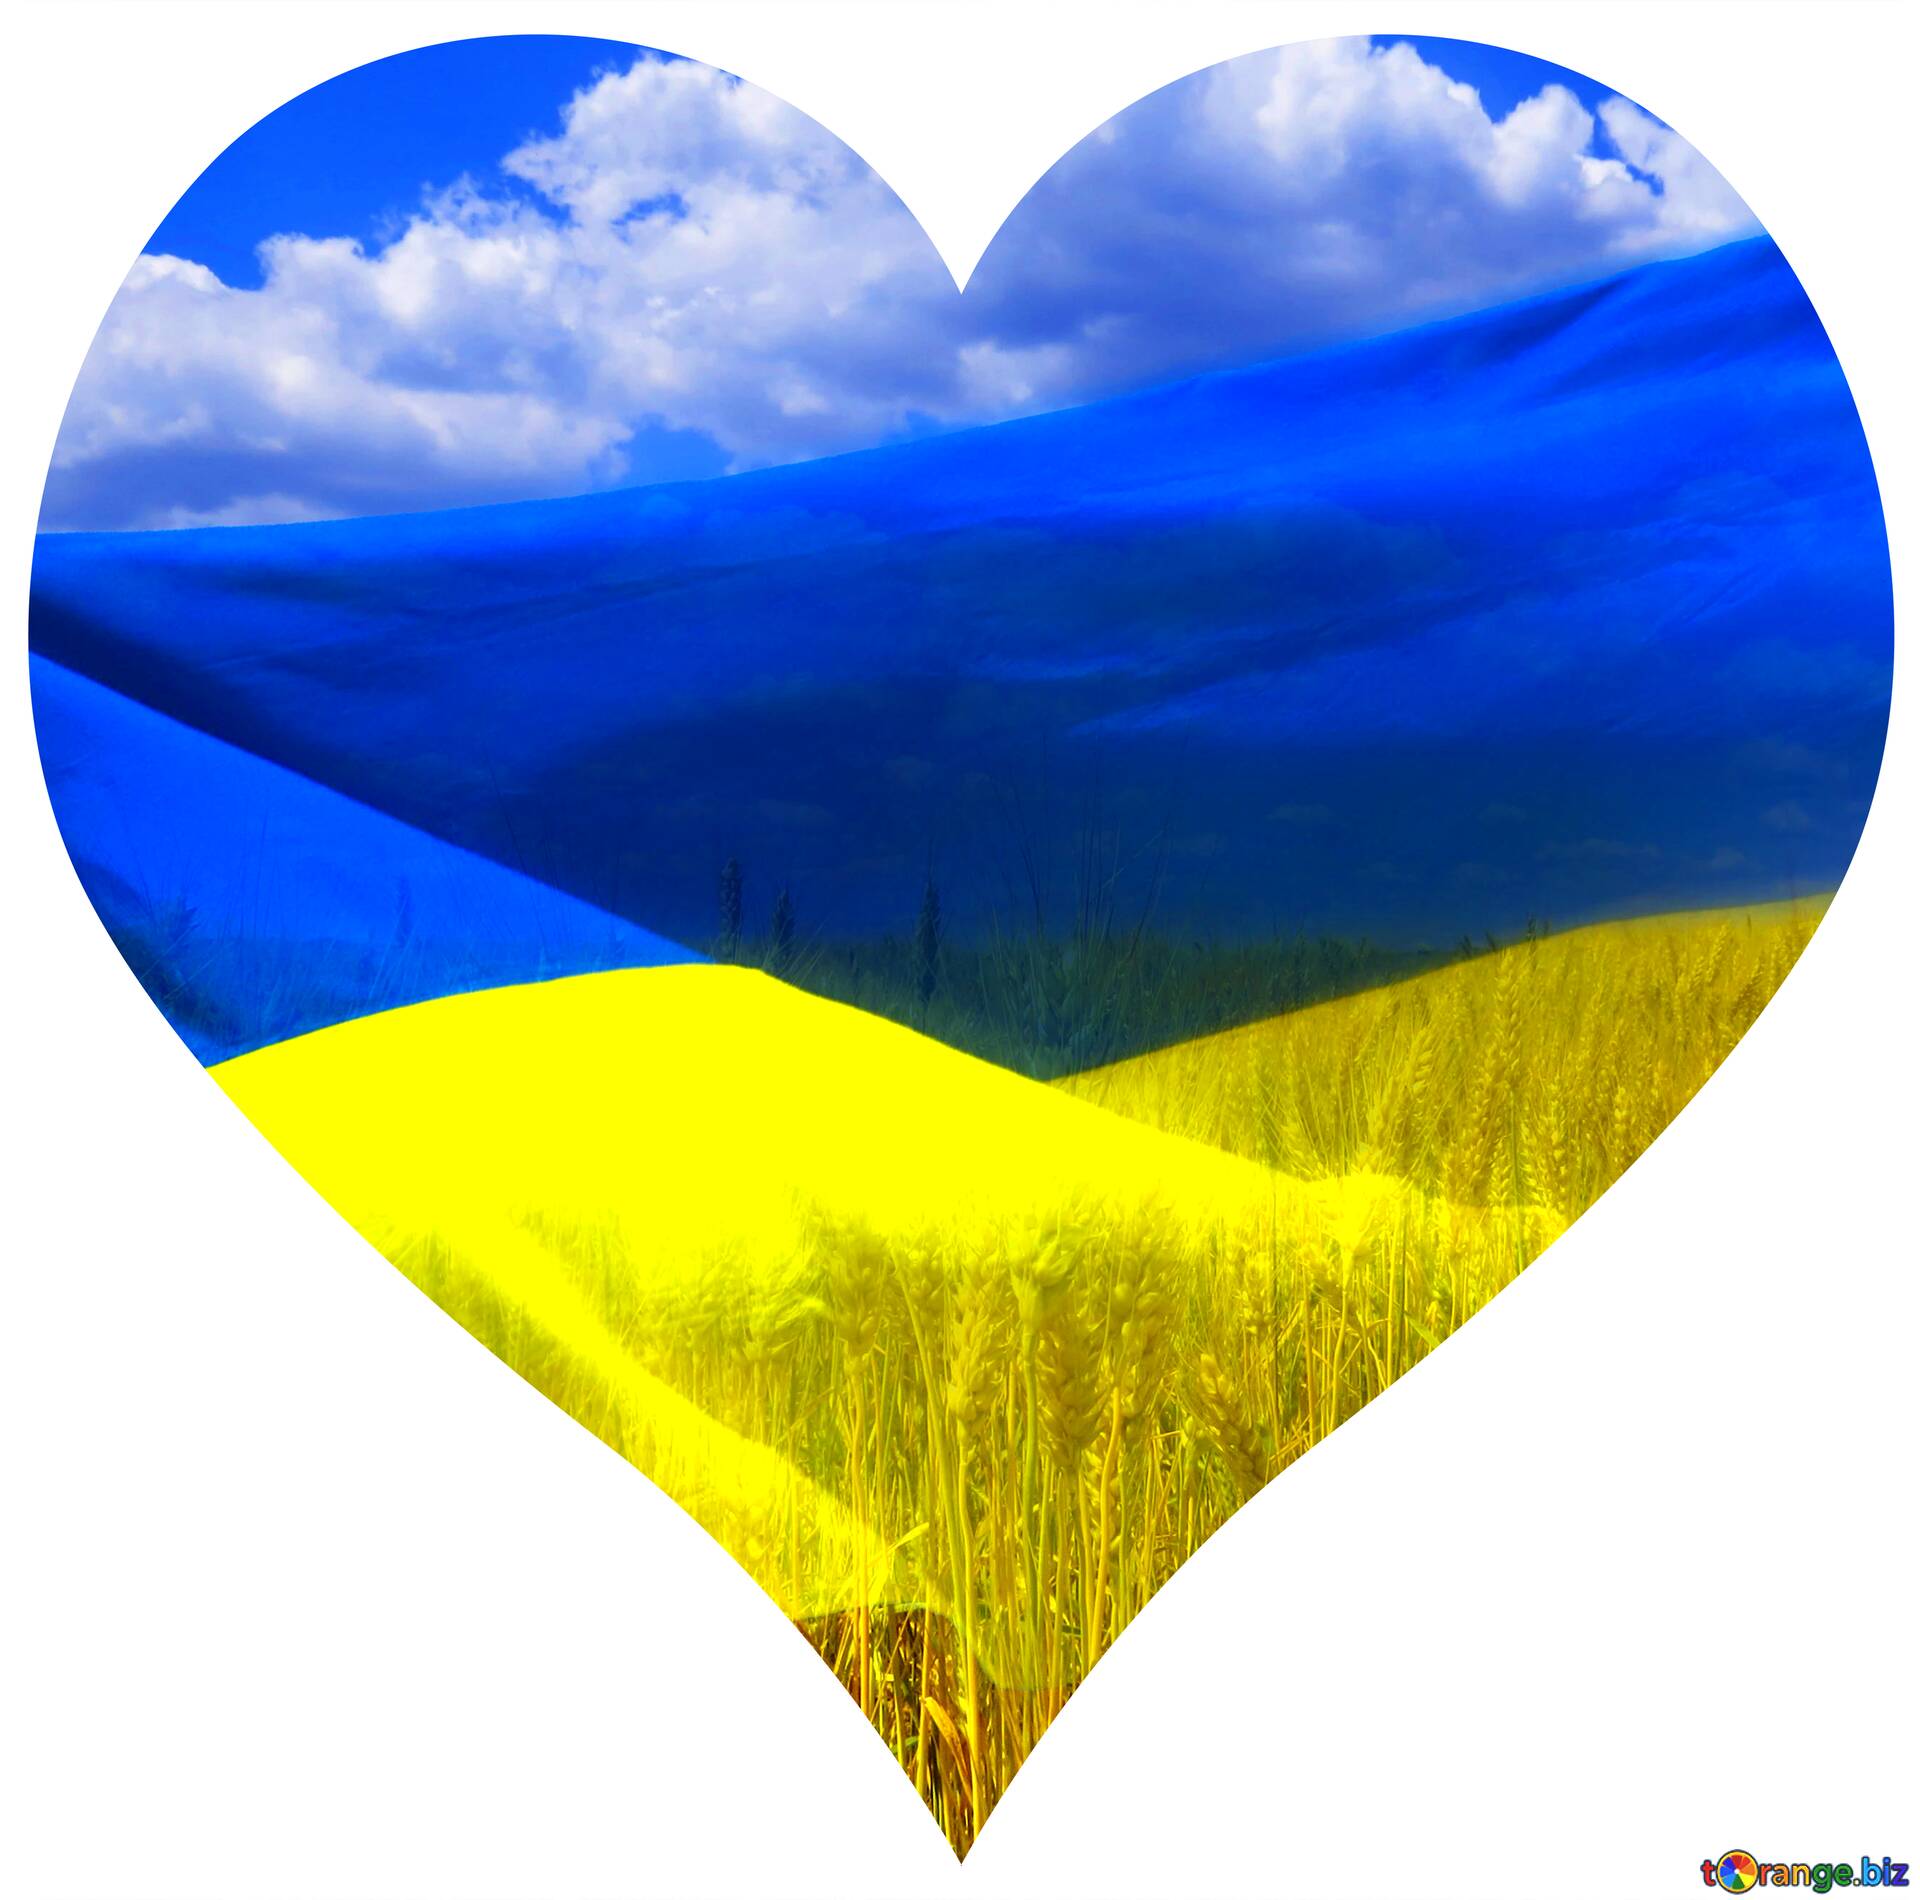 500+ Ukraine Pictures | Download Free Images on Unsplash